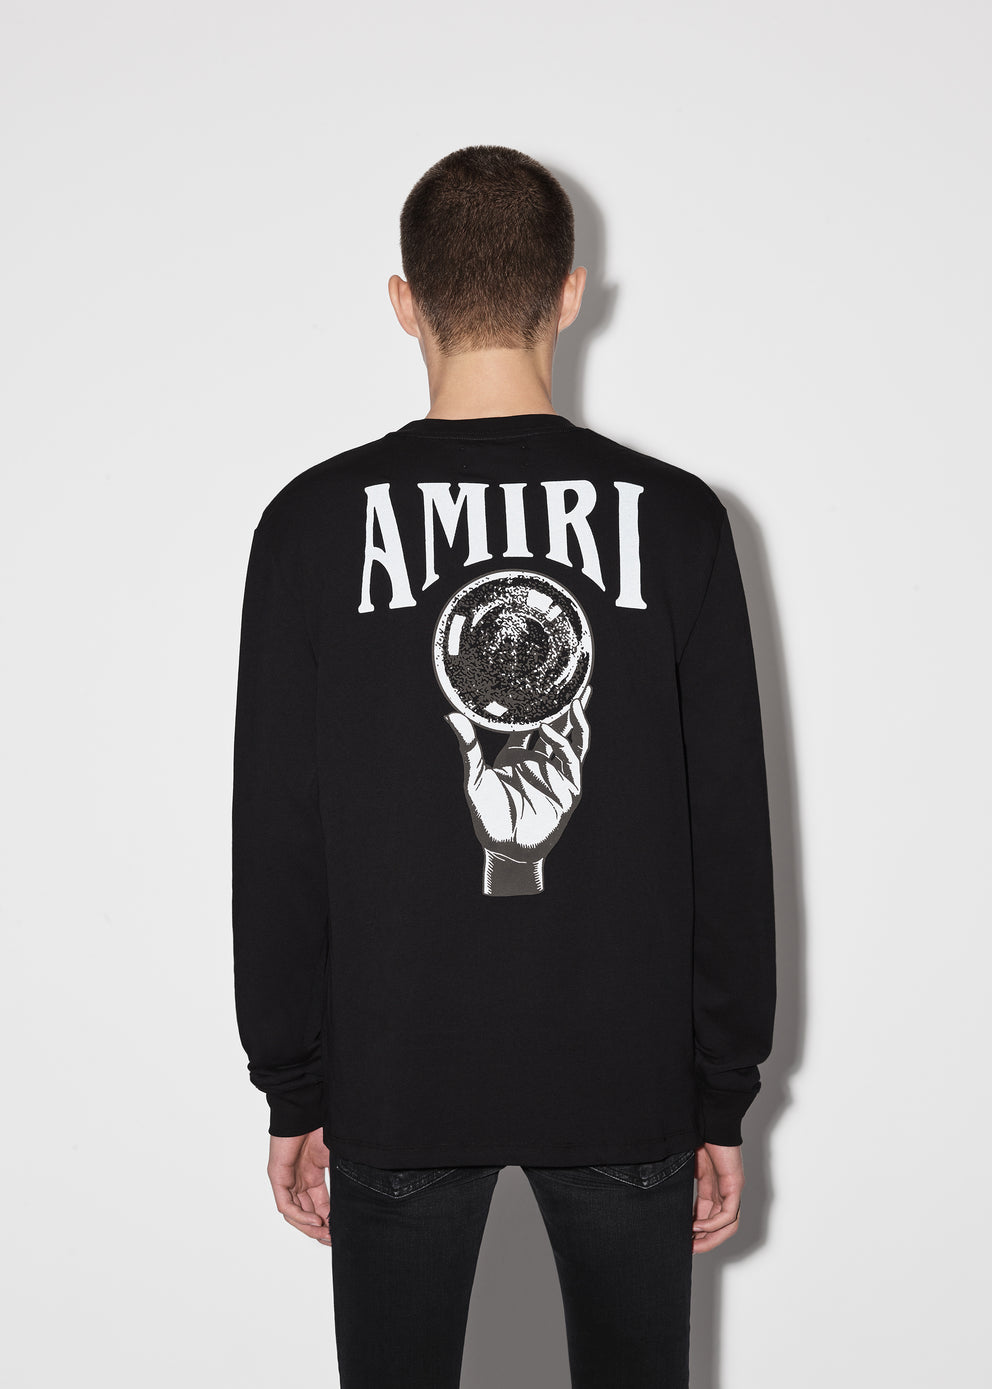 Camisetas Running Amiri Crystal Ball Long Sleeve Hombre Negras | 1298-RHFGE